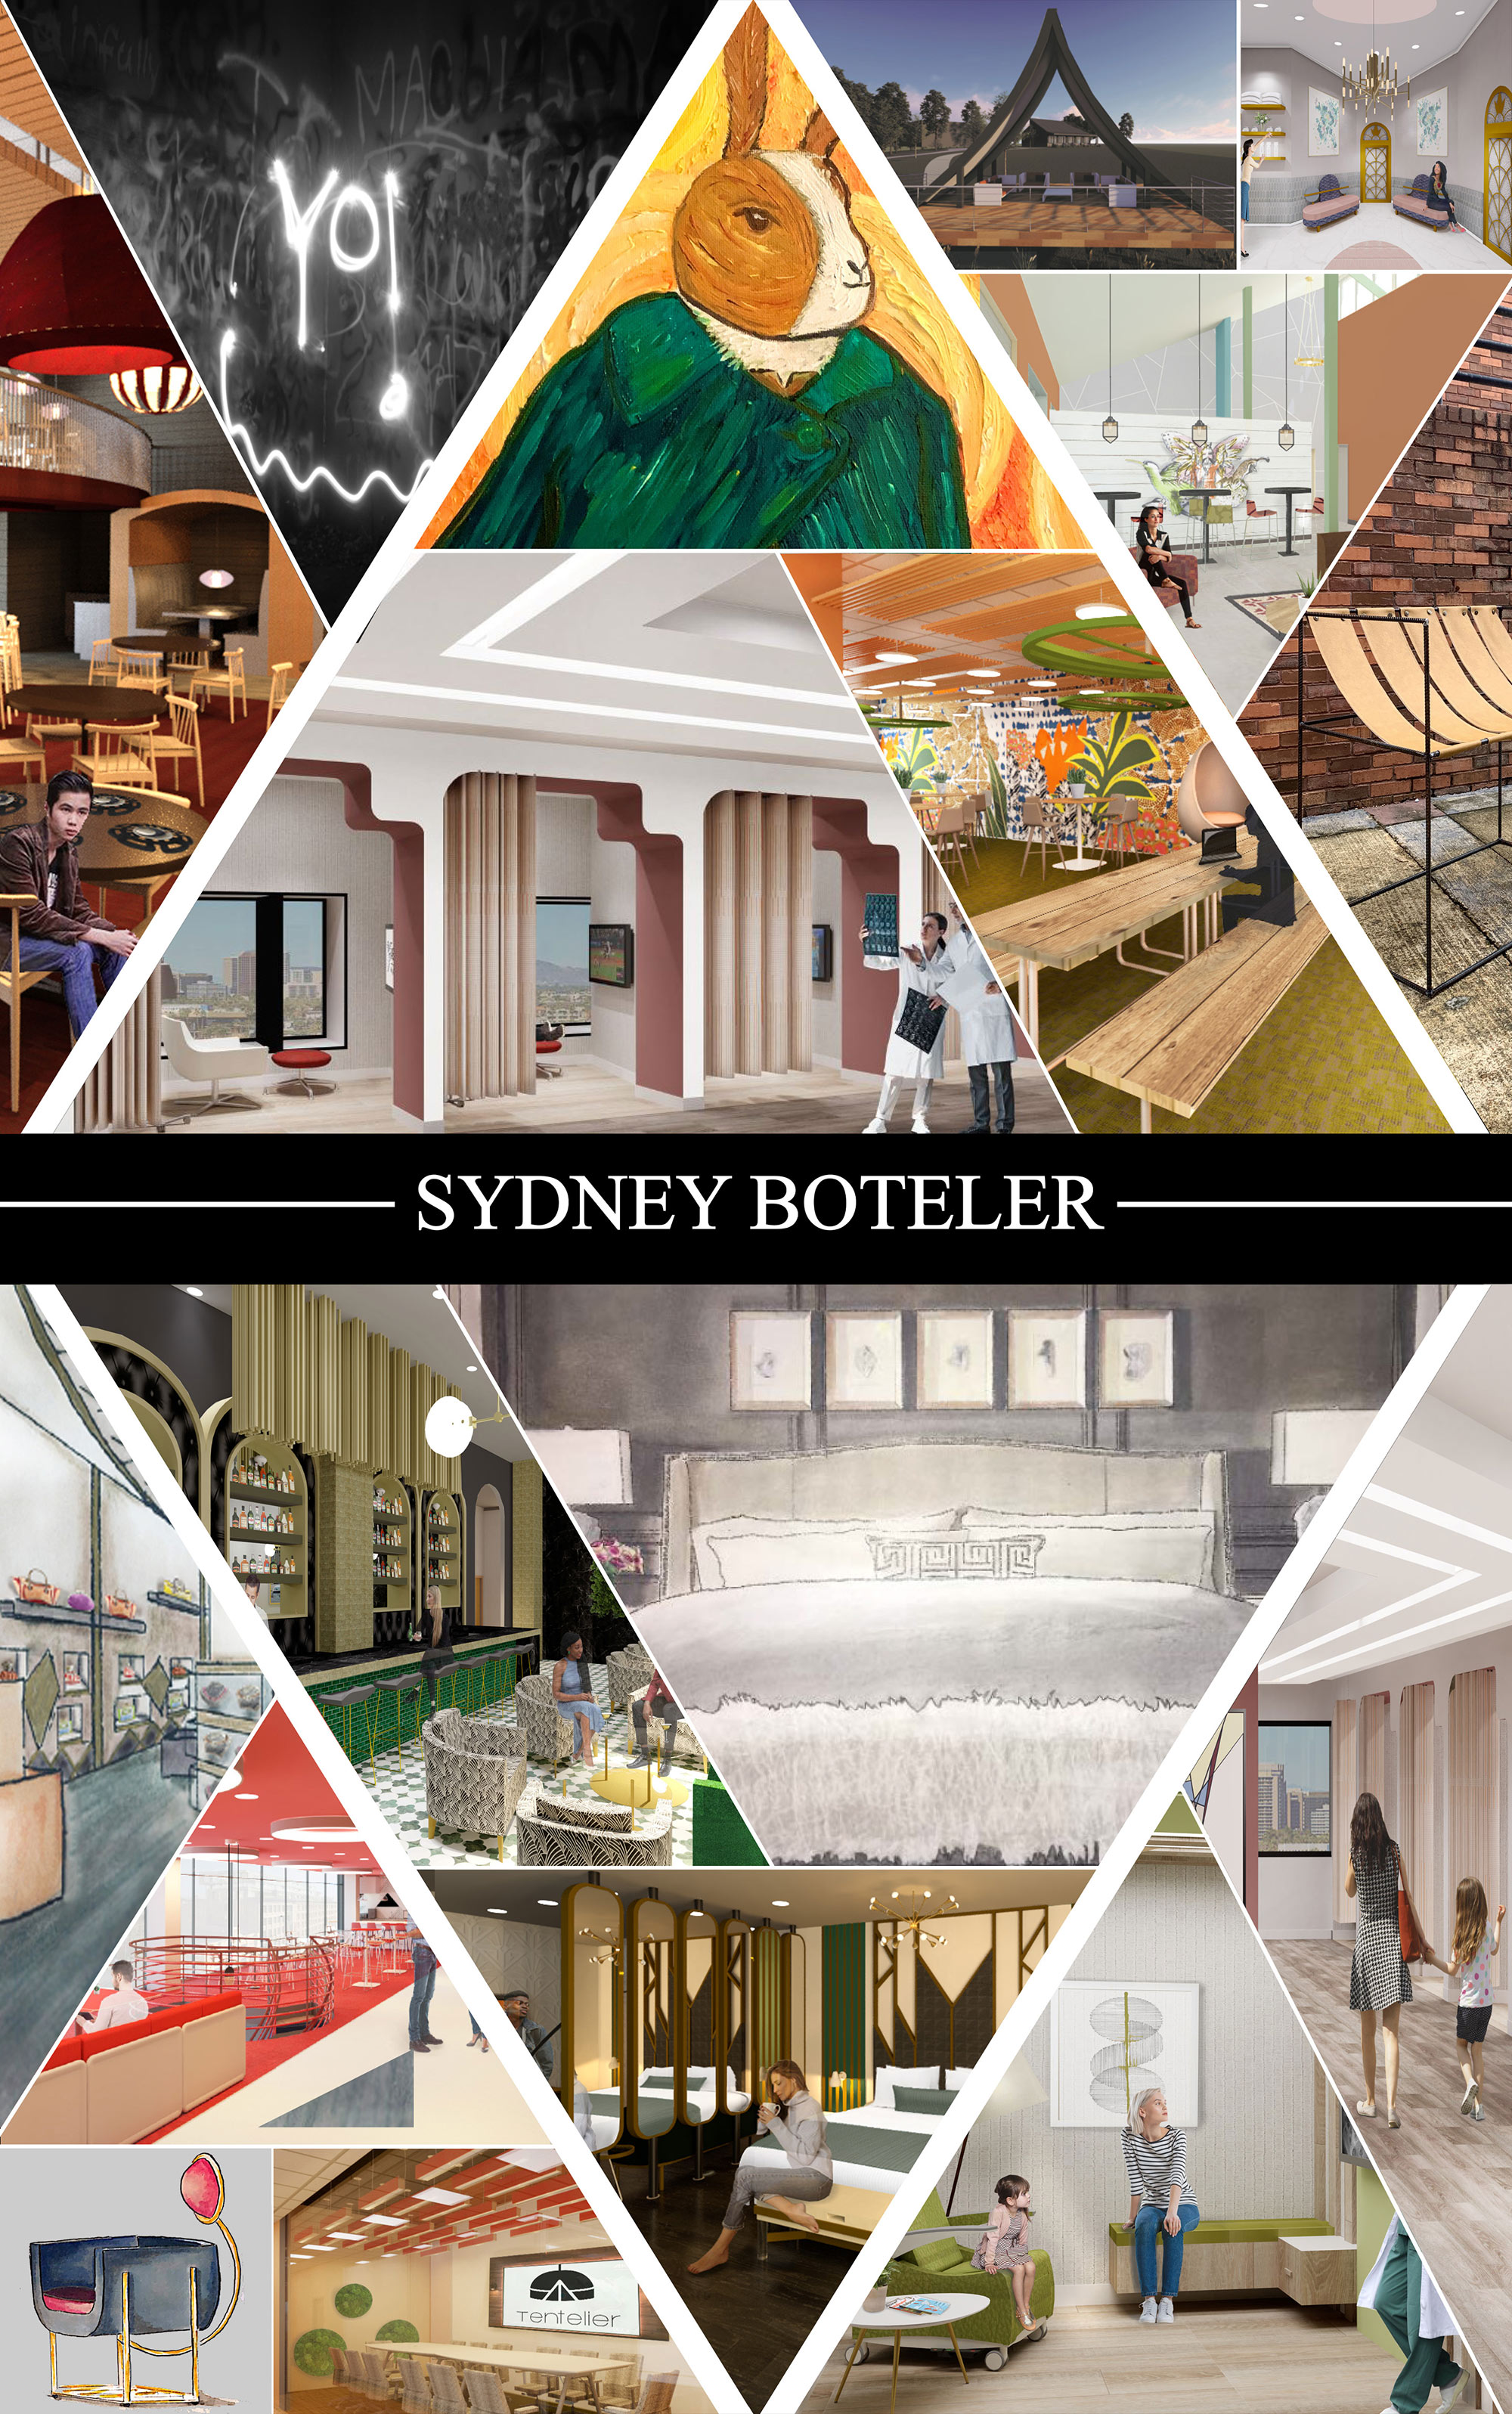 Sydney Boteler's senior exhibit board